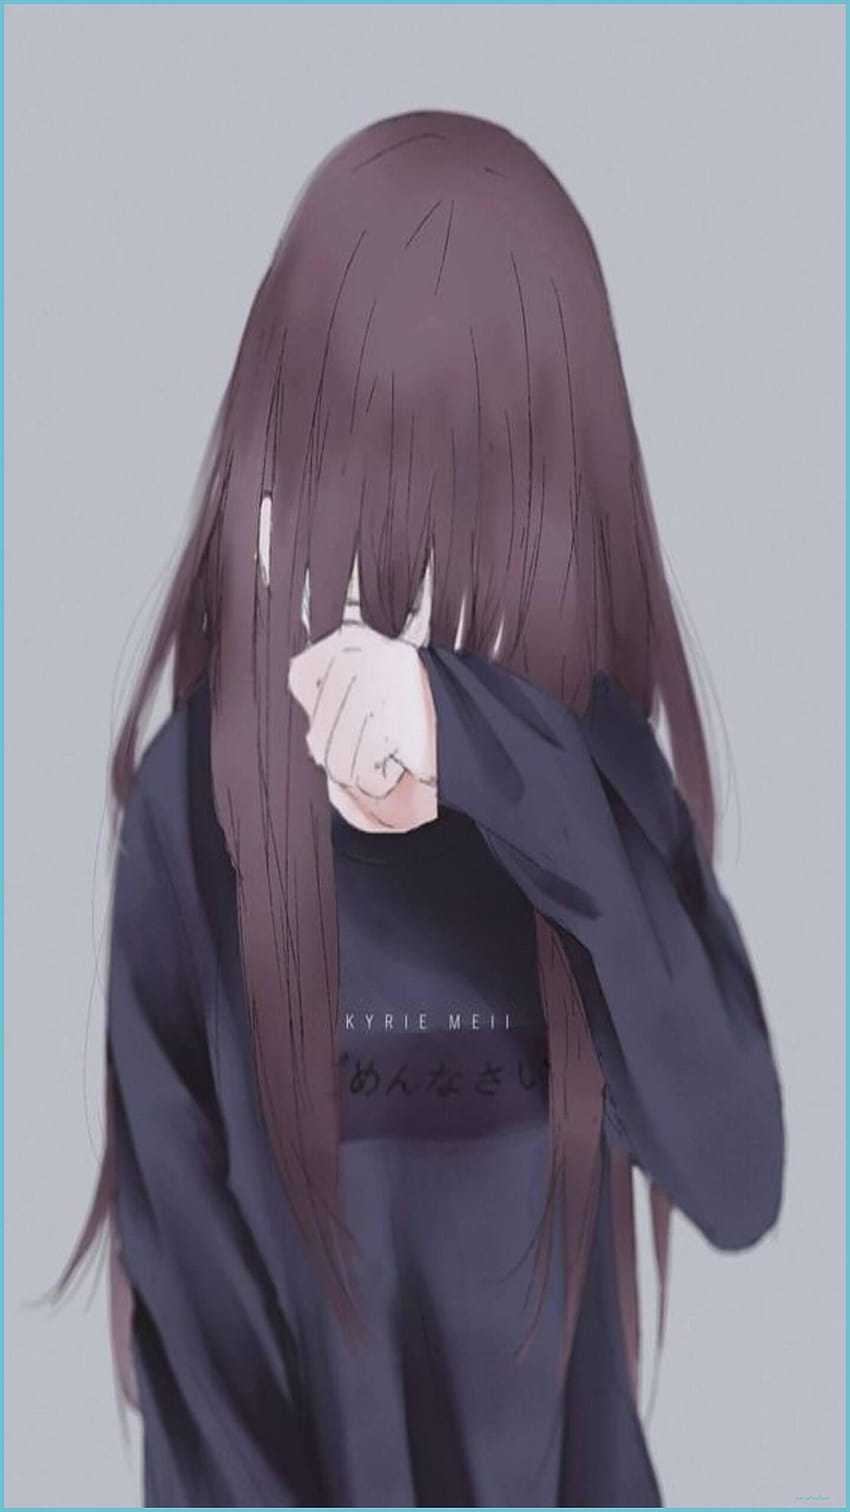 Sad anime girl base by PrincessPippy on DeviantArt